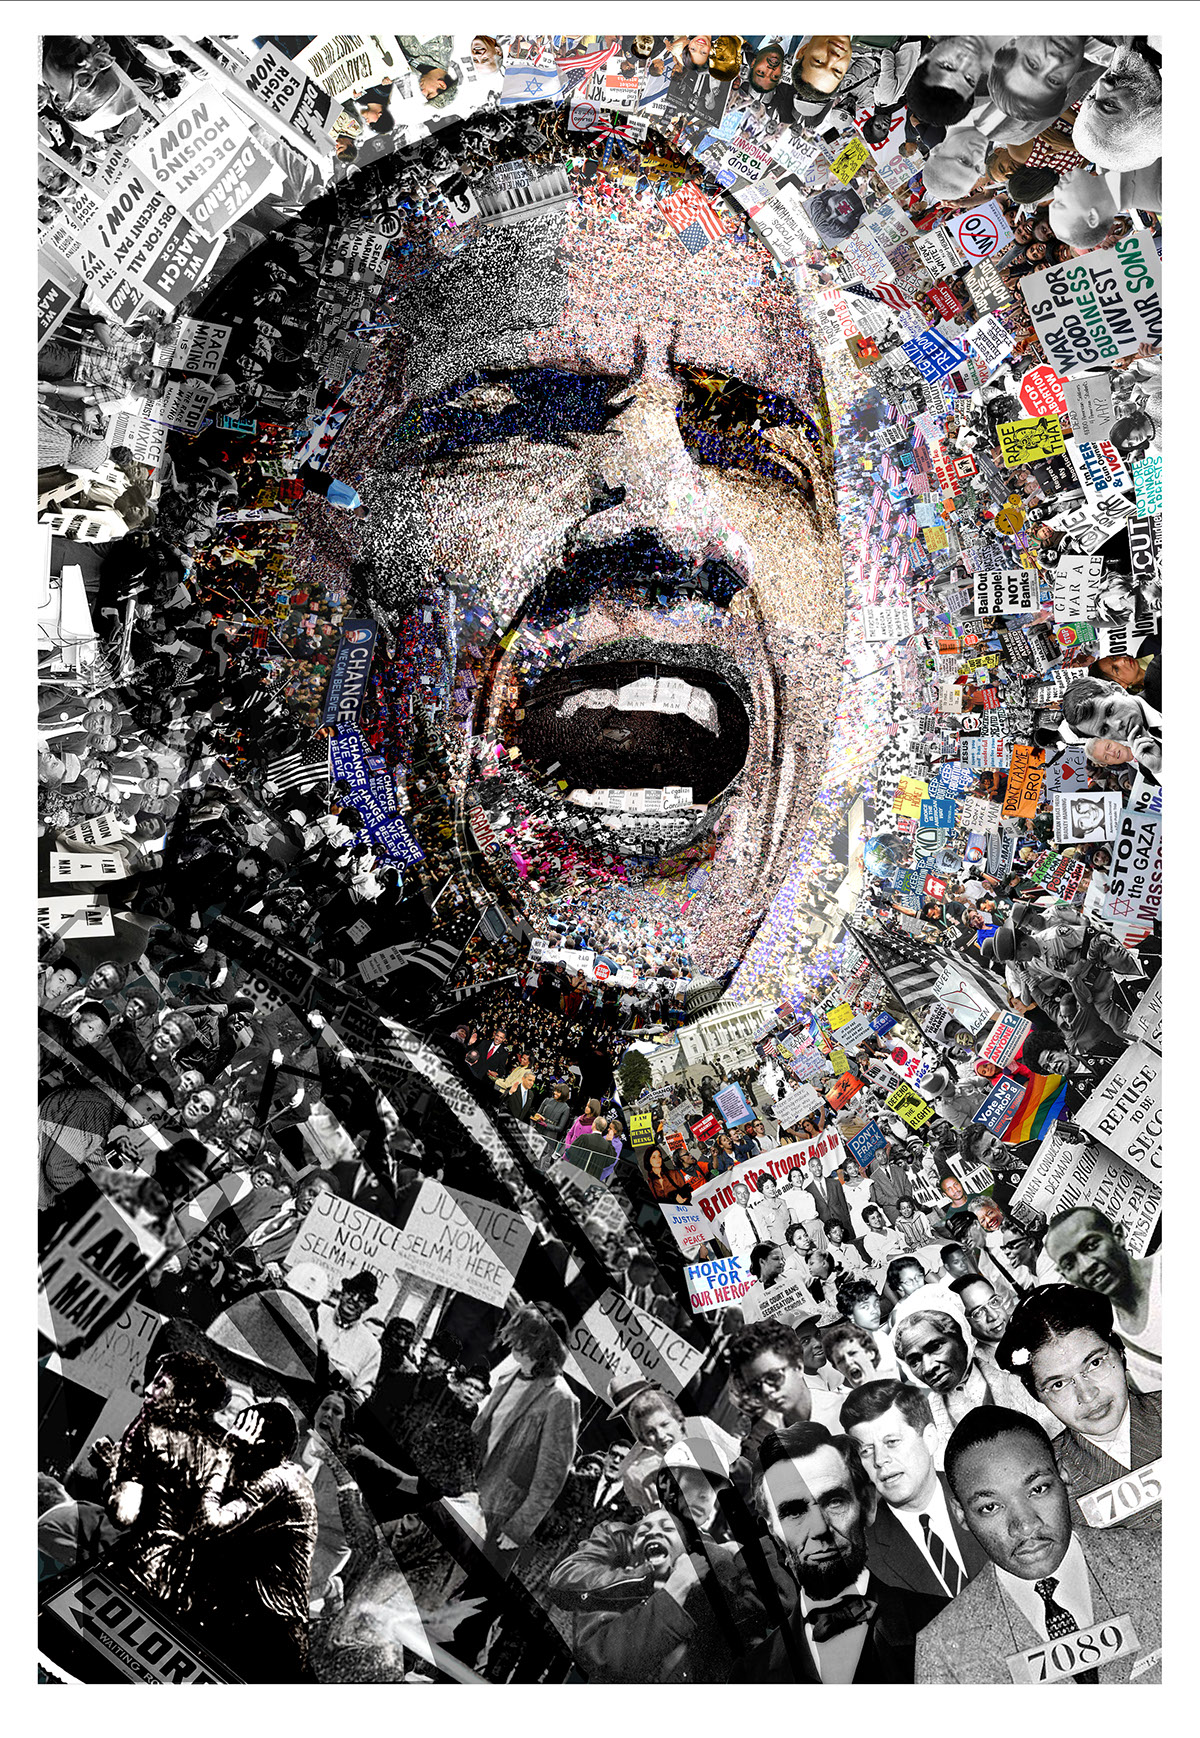 × barack obama × obama poster × MLK × Michelle Obama × President × SOHO × O O × Civil Rights × protest × street art × Martin Luther King × google